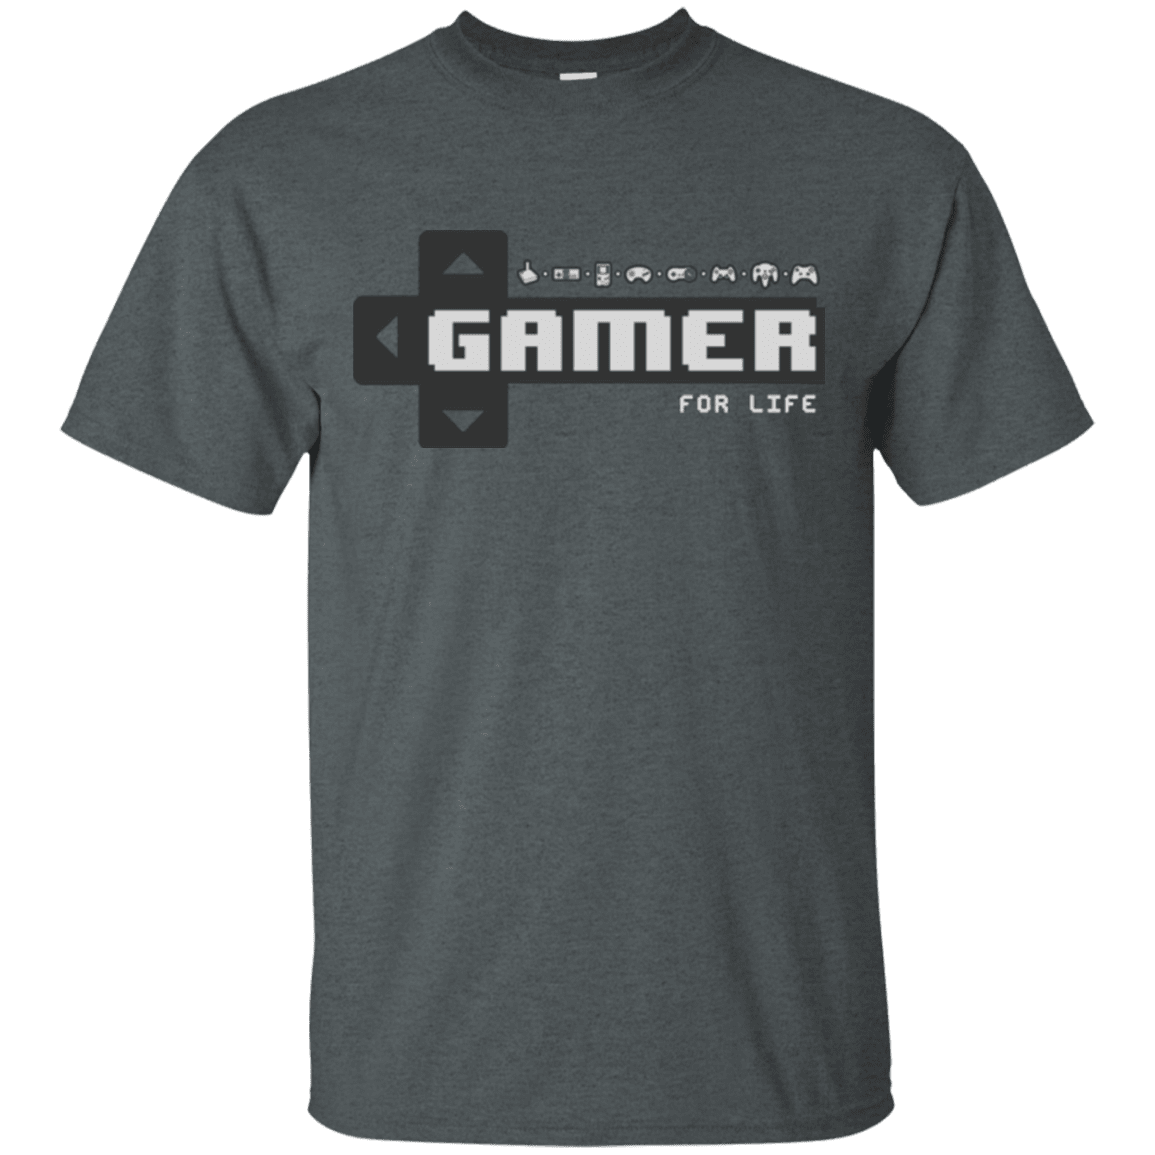 T-Shirts Dark Heather / Small Gamer T-Shirt